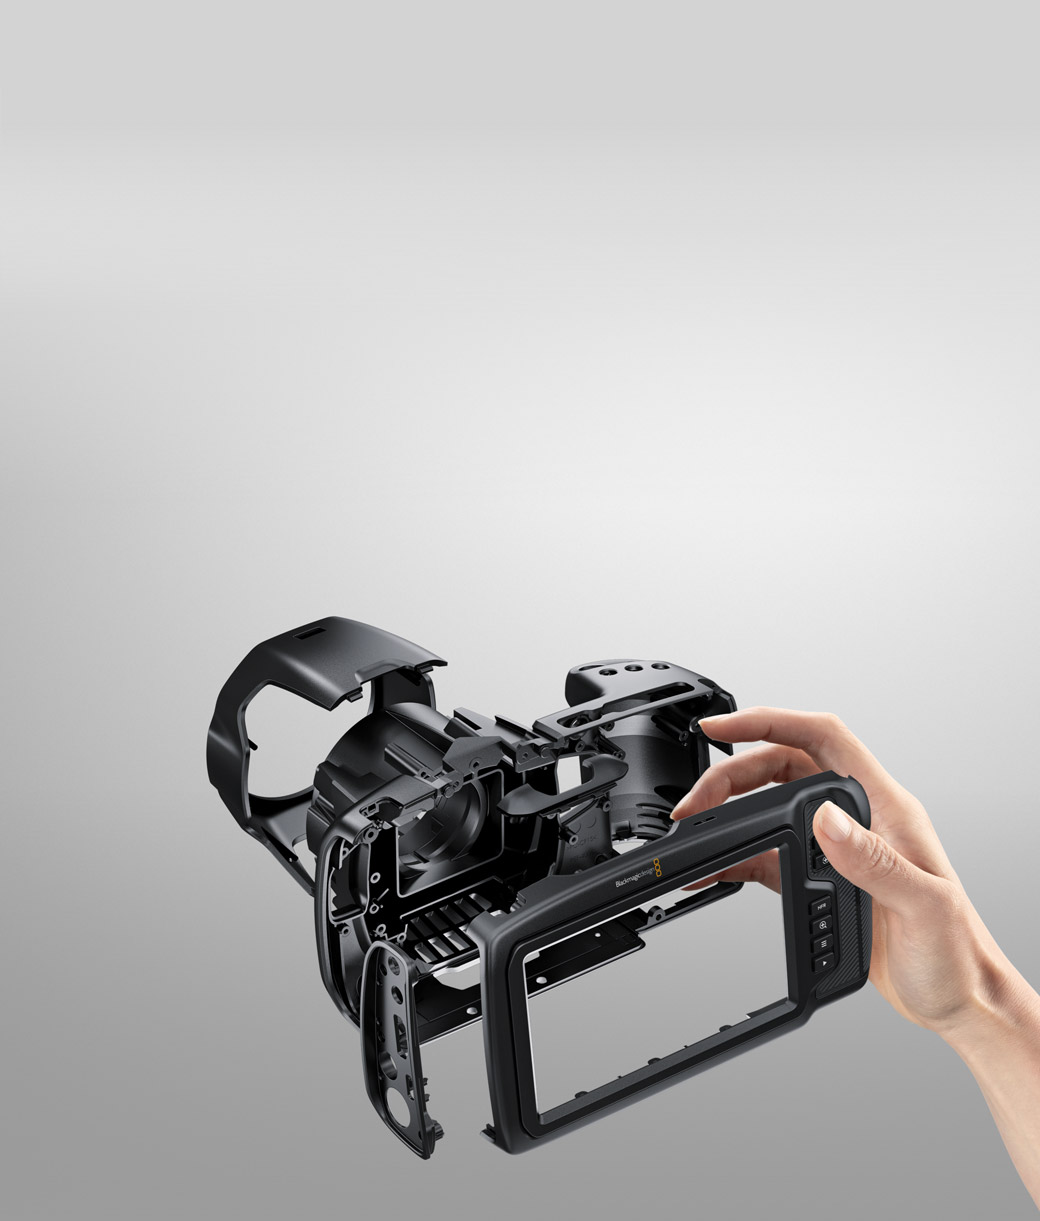 Blackmagic Pocket Cinema Camera – Design | Blackmagic Design